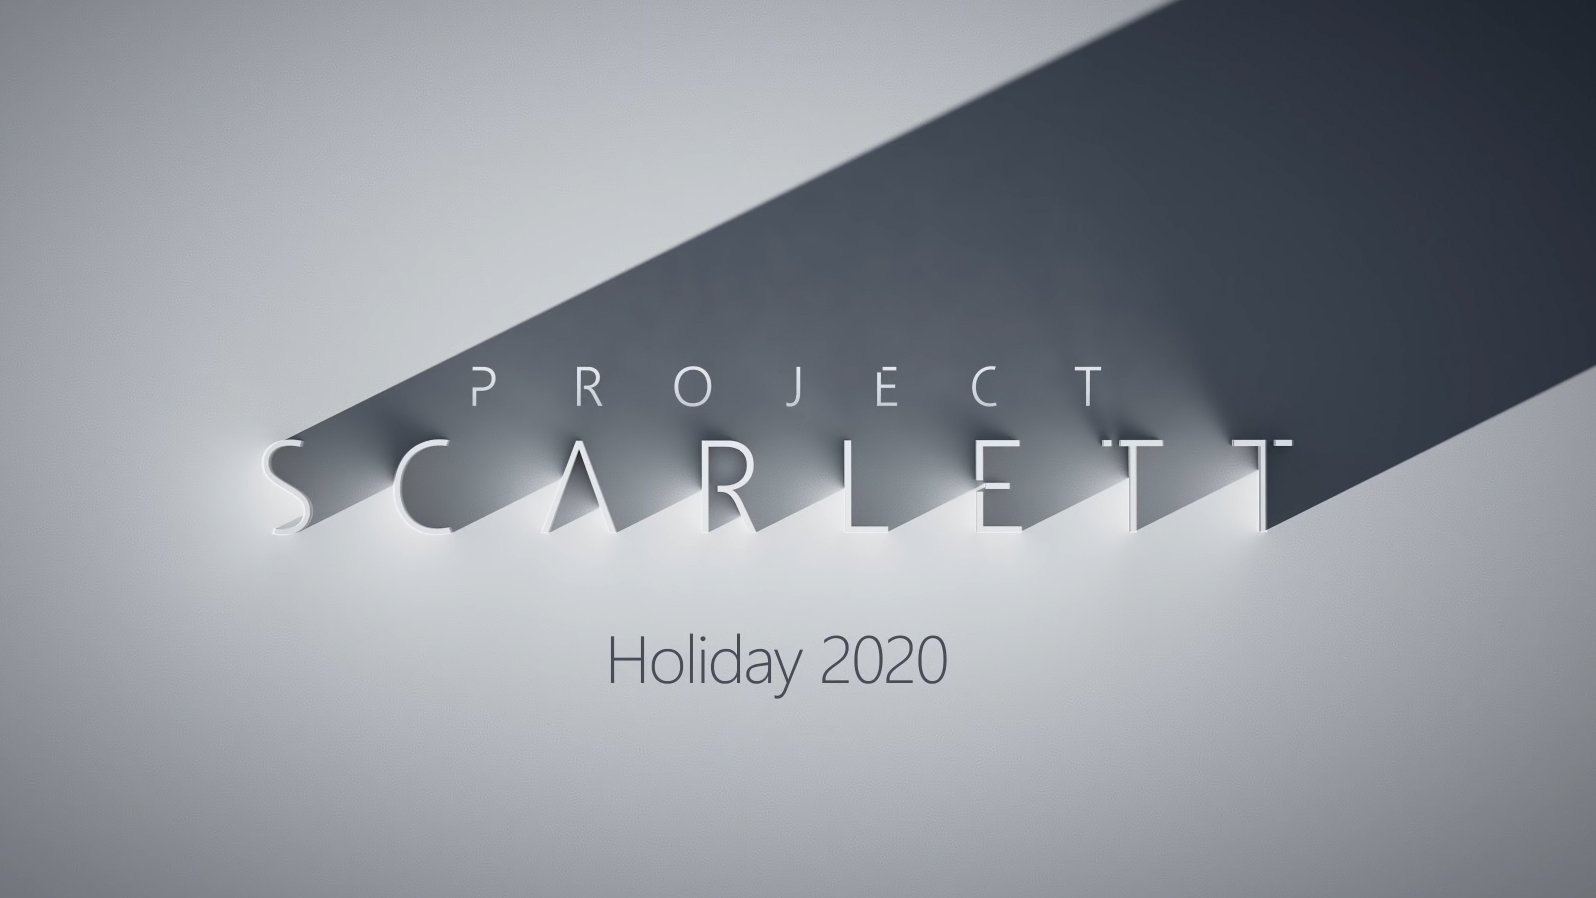 Xbox Scarlett - Holiday 2020